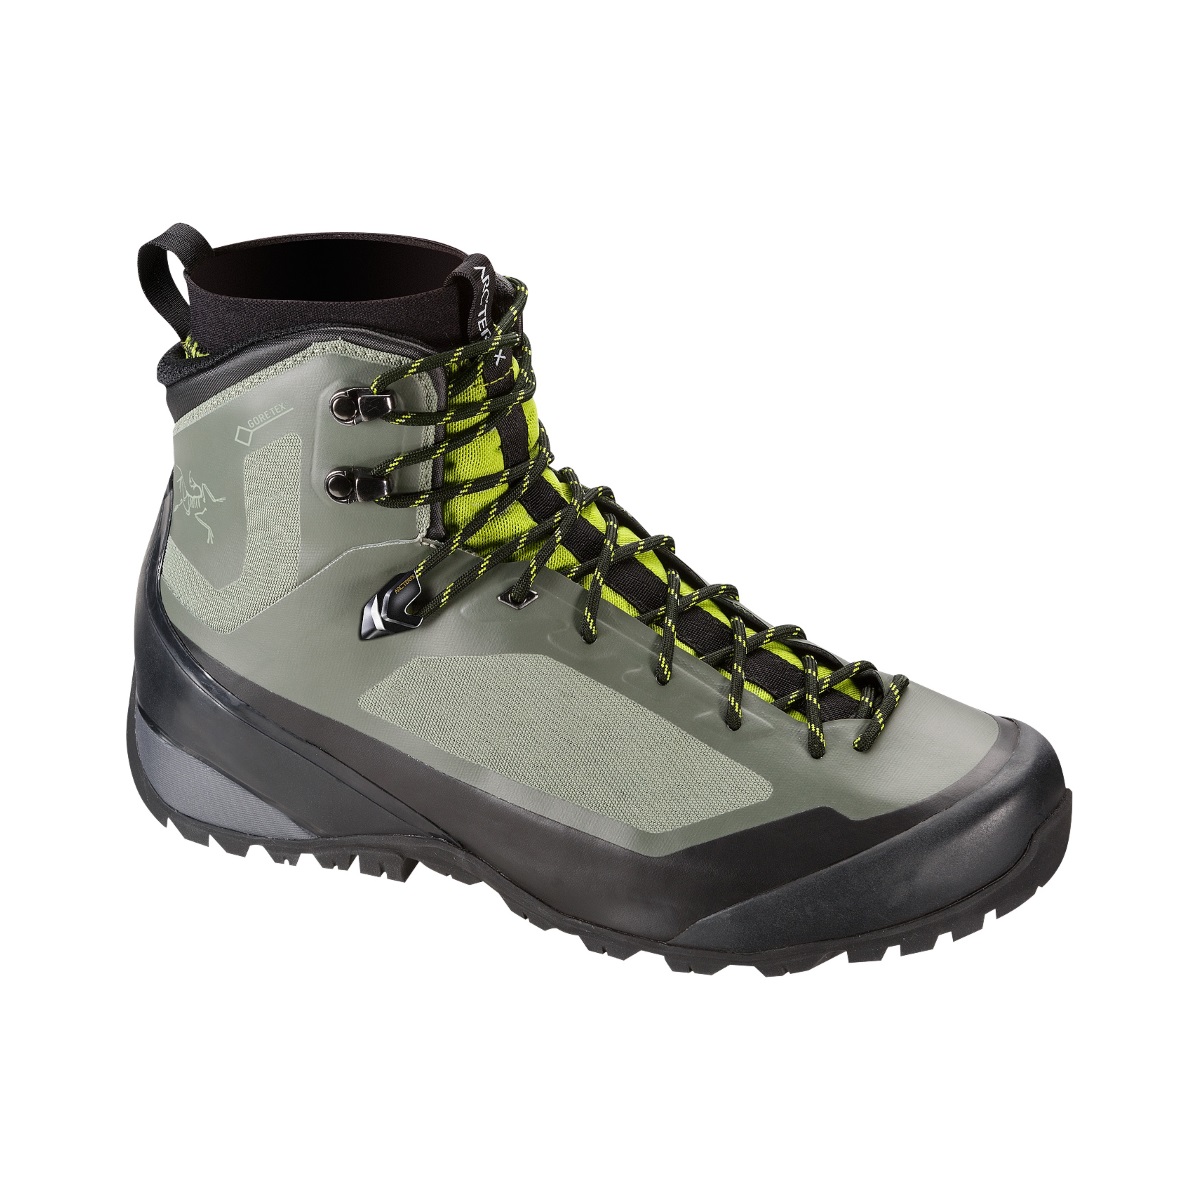 Arc'teryx Bora Mid GTX Hiking Boot, men's, discontinued Spring 2019 ...